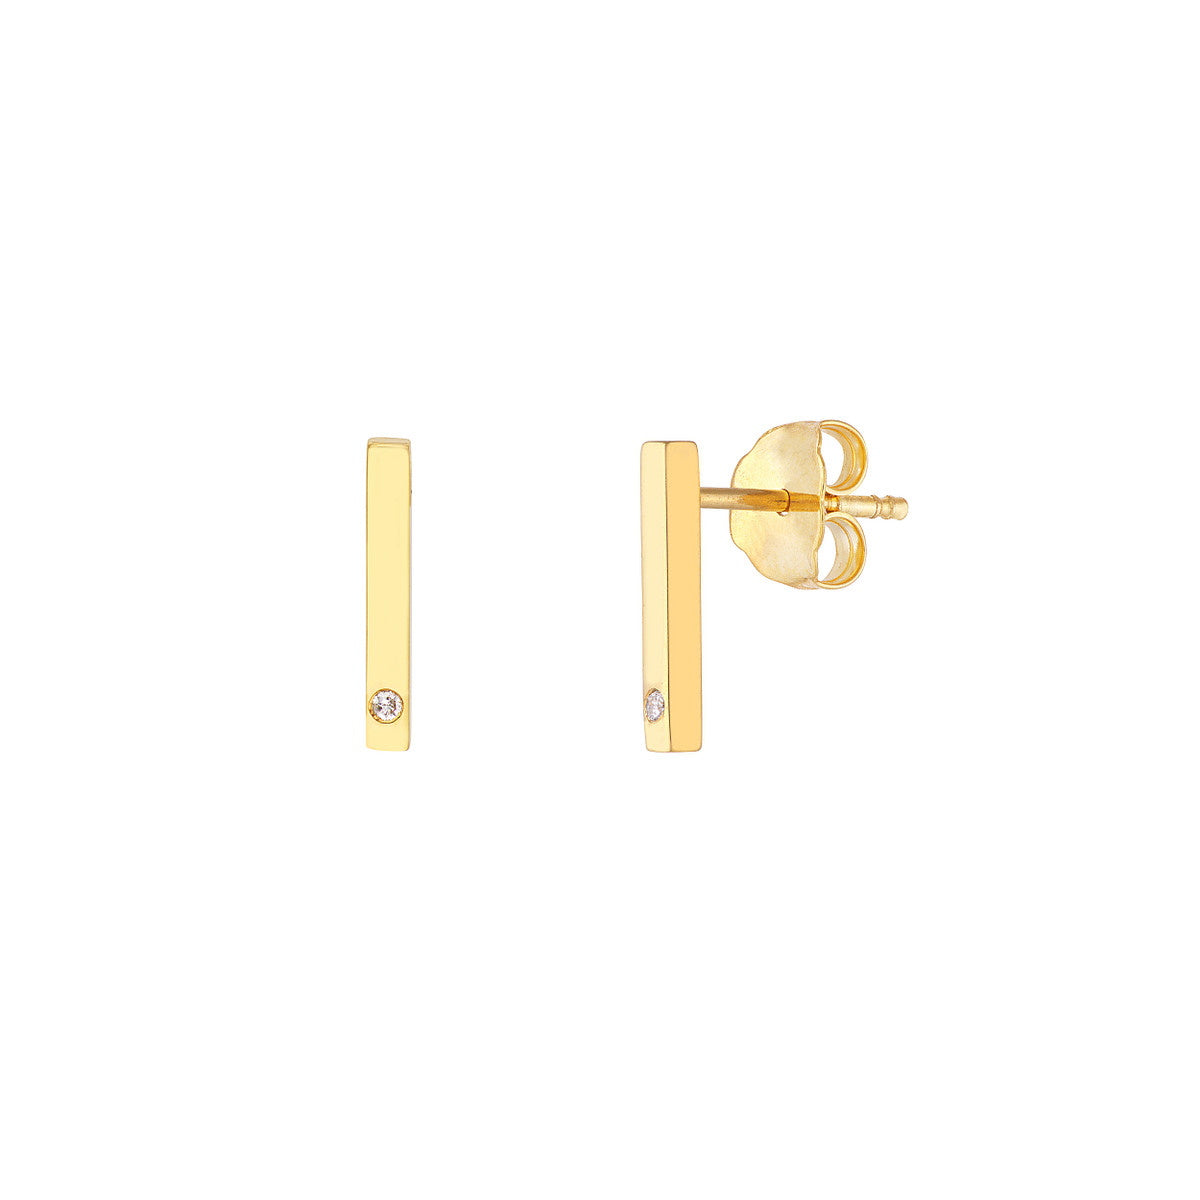 Gold Bar Earrings with Diamonds - Alexis Jae Jewelry